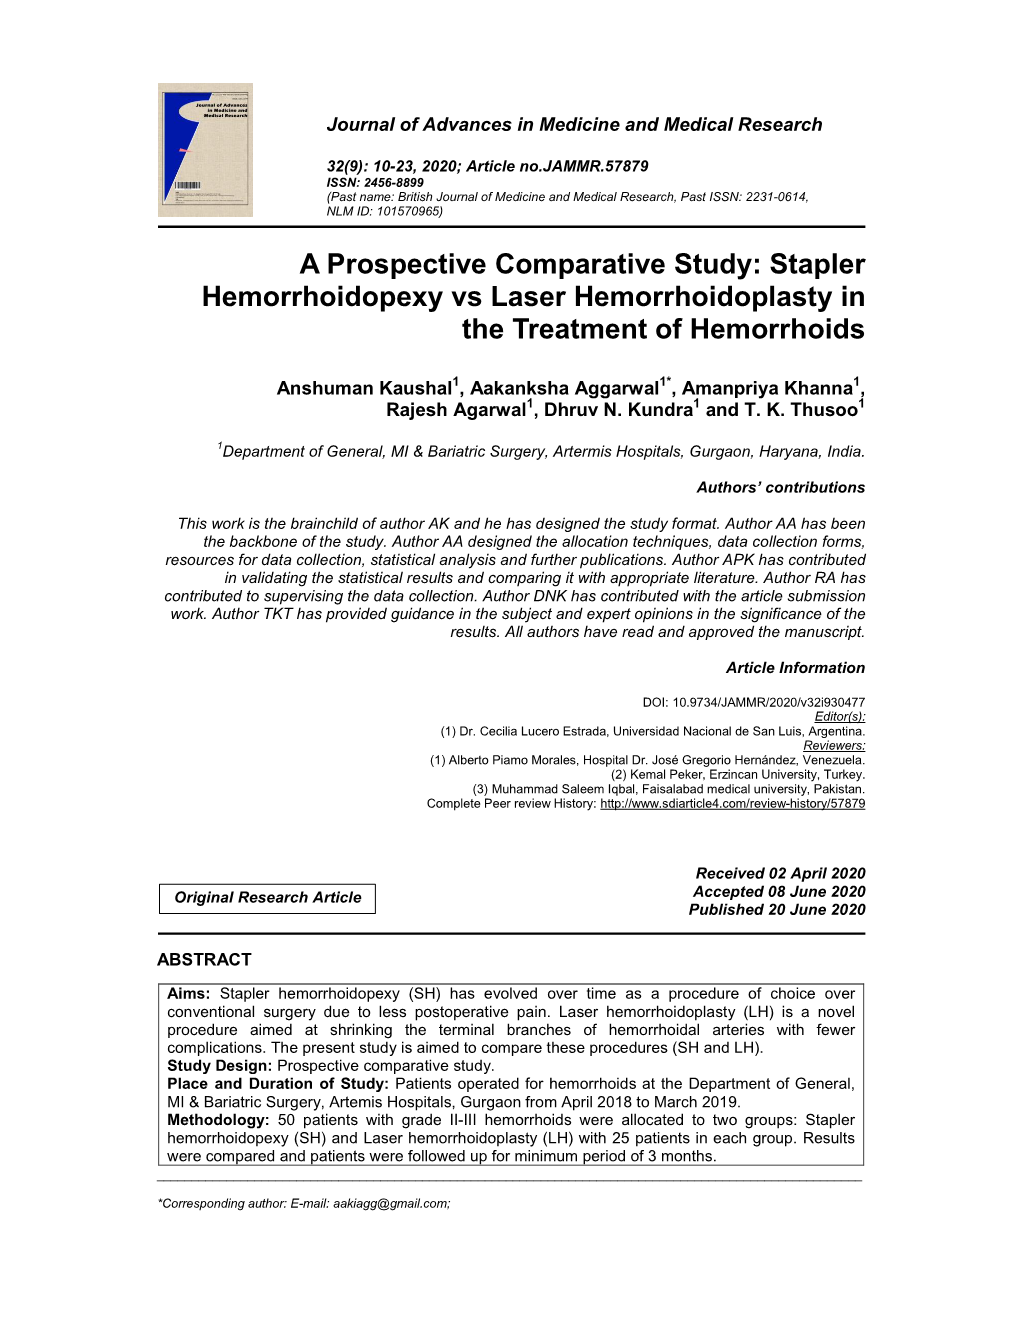 Stapler Hemorrhoidopexy Vs Laser Hemorrhoidoplasty in the Treatment of Hemorrhoids